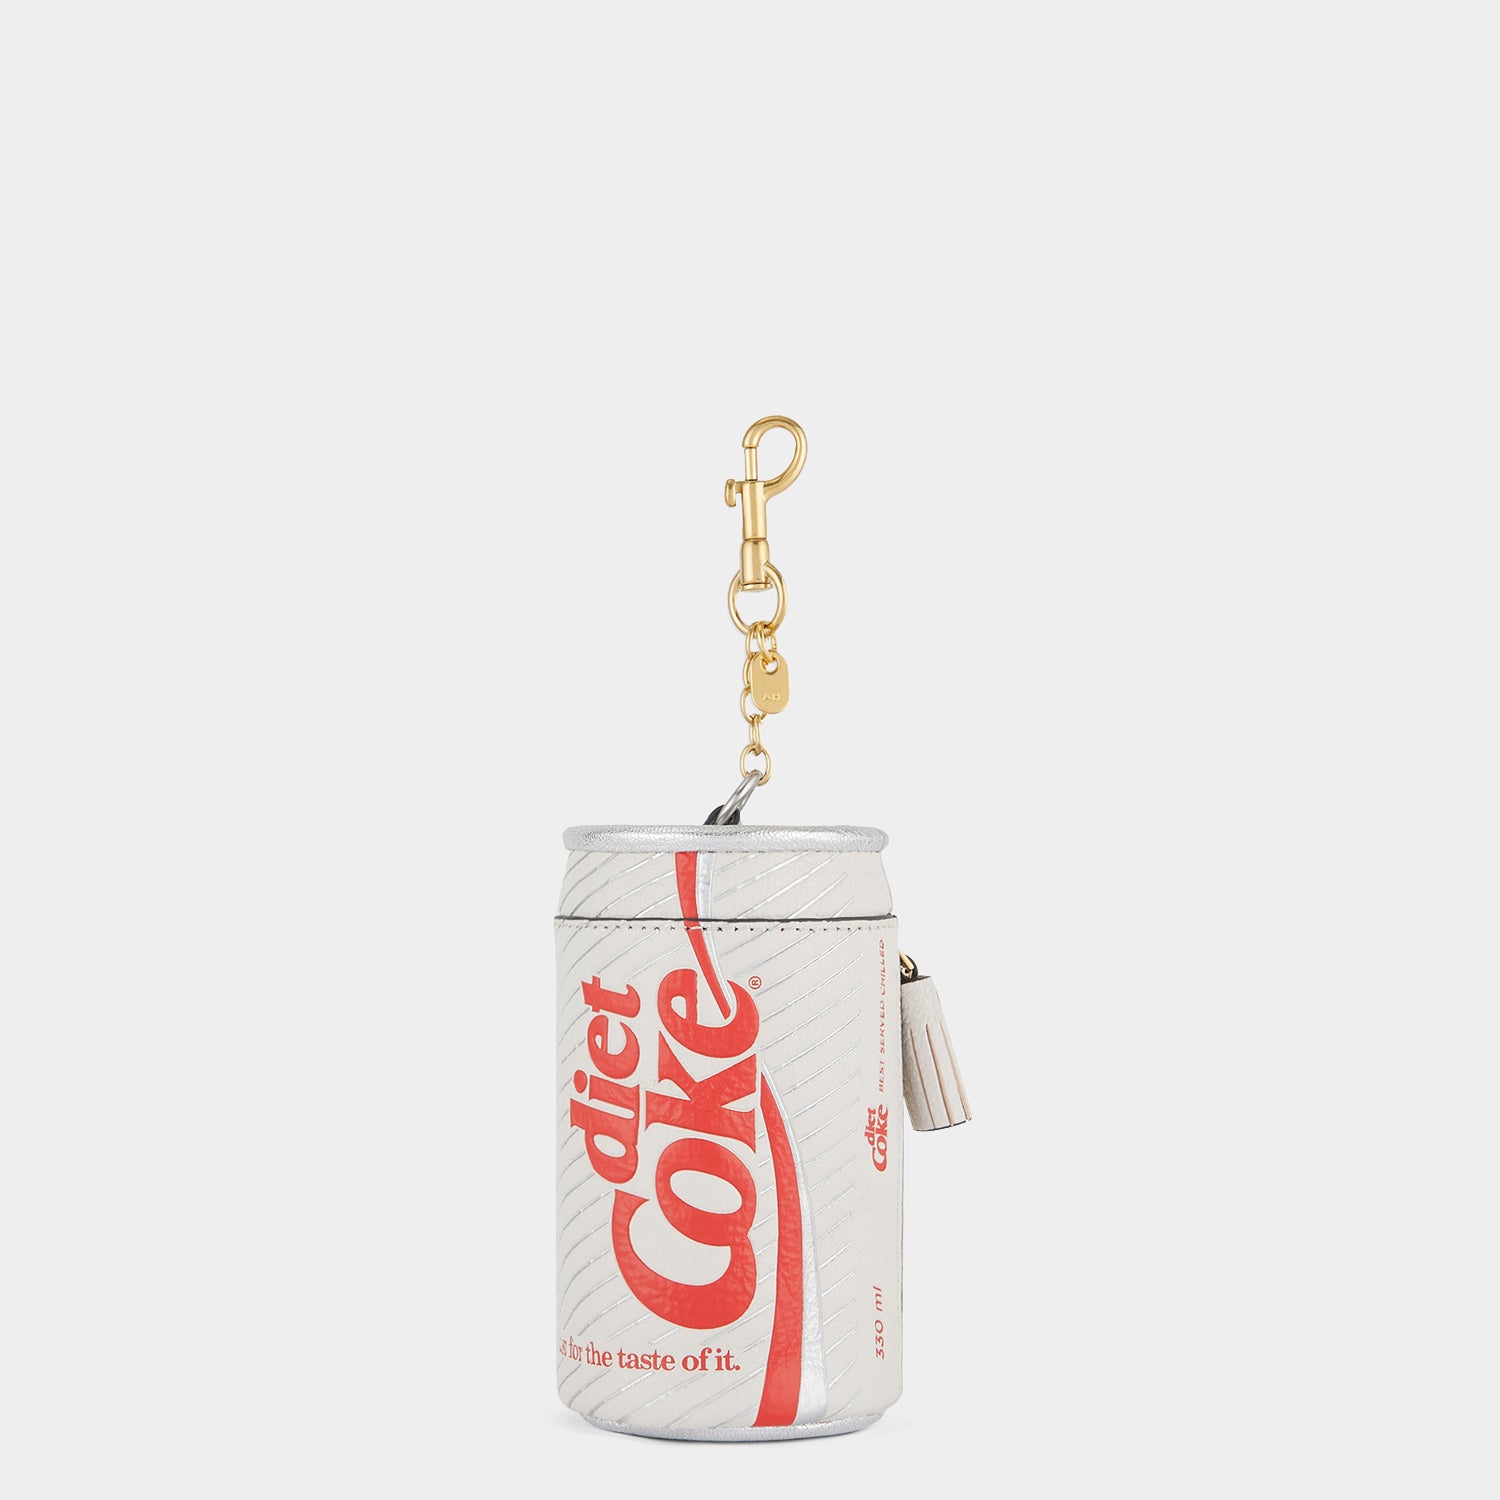 「Diet Coke」 コイン パース